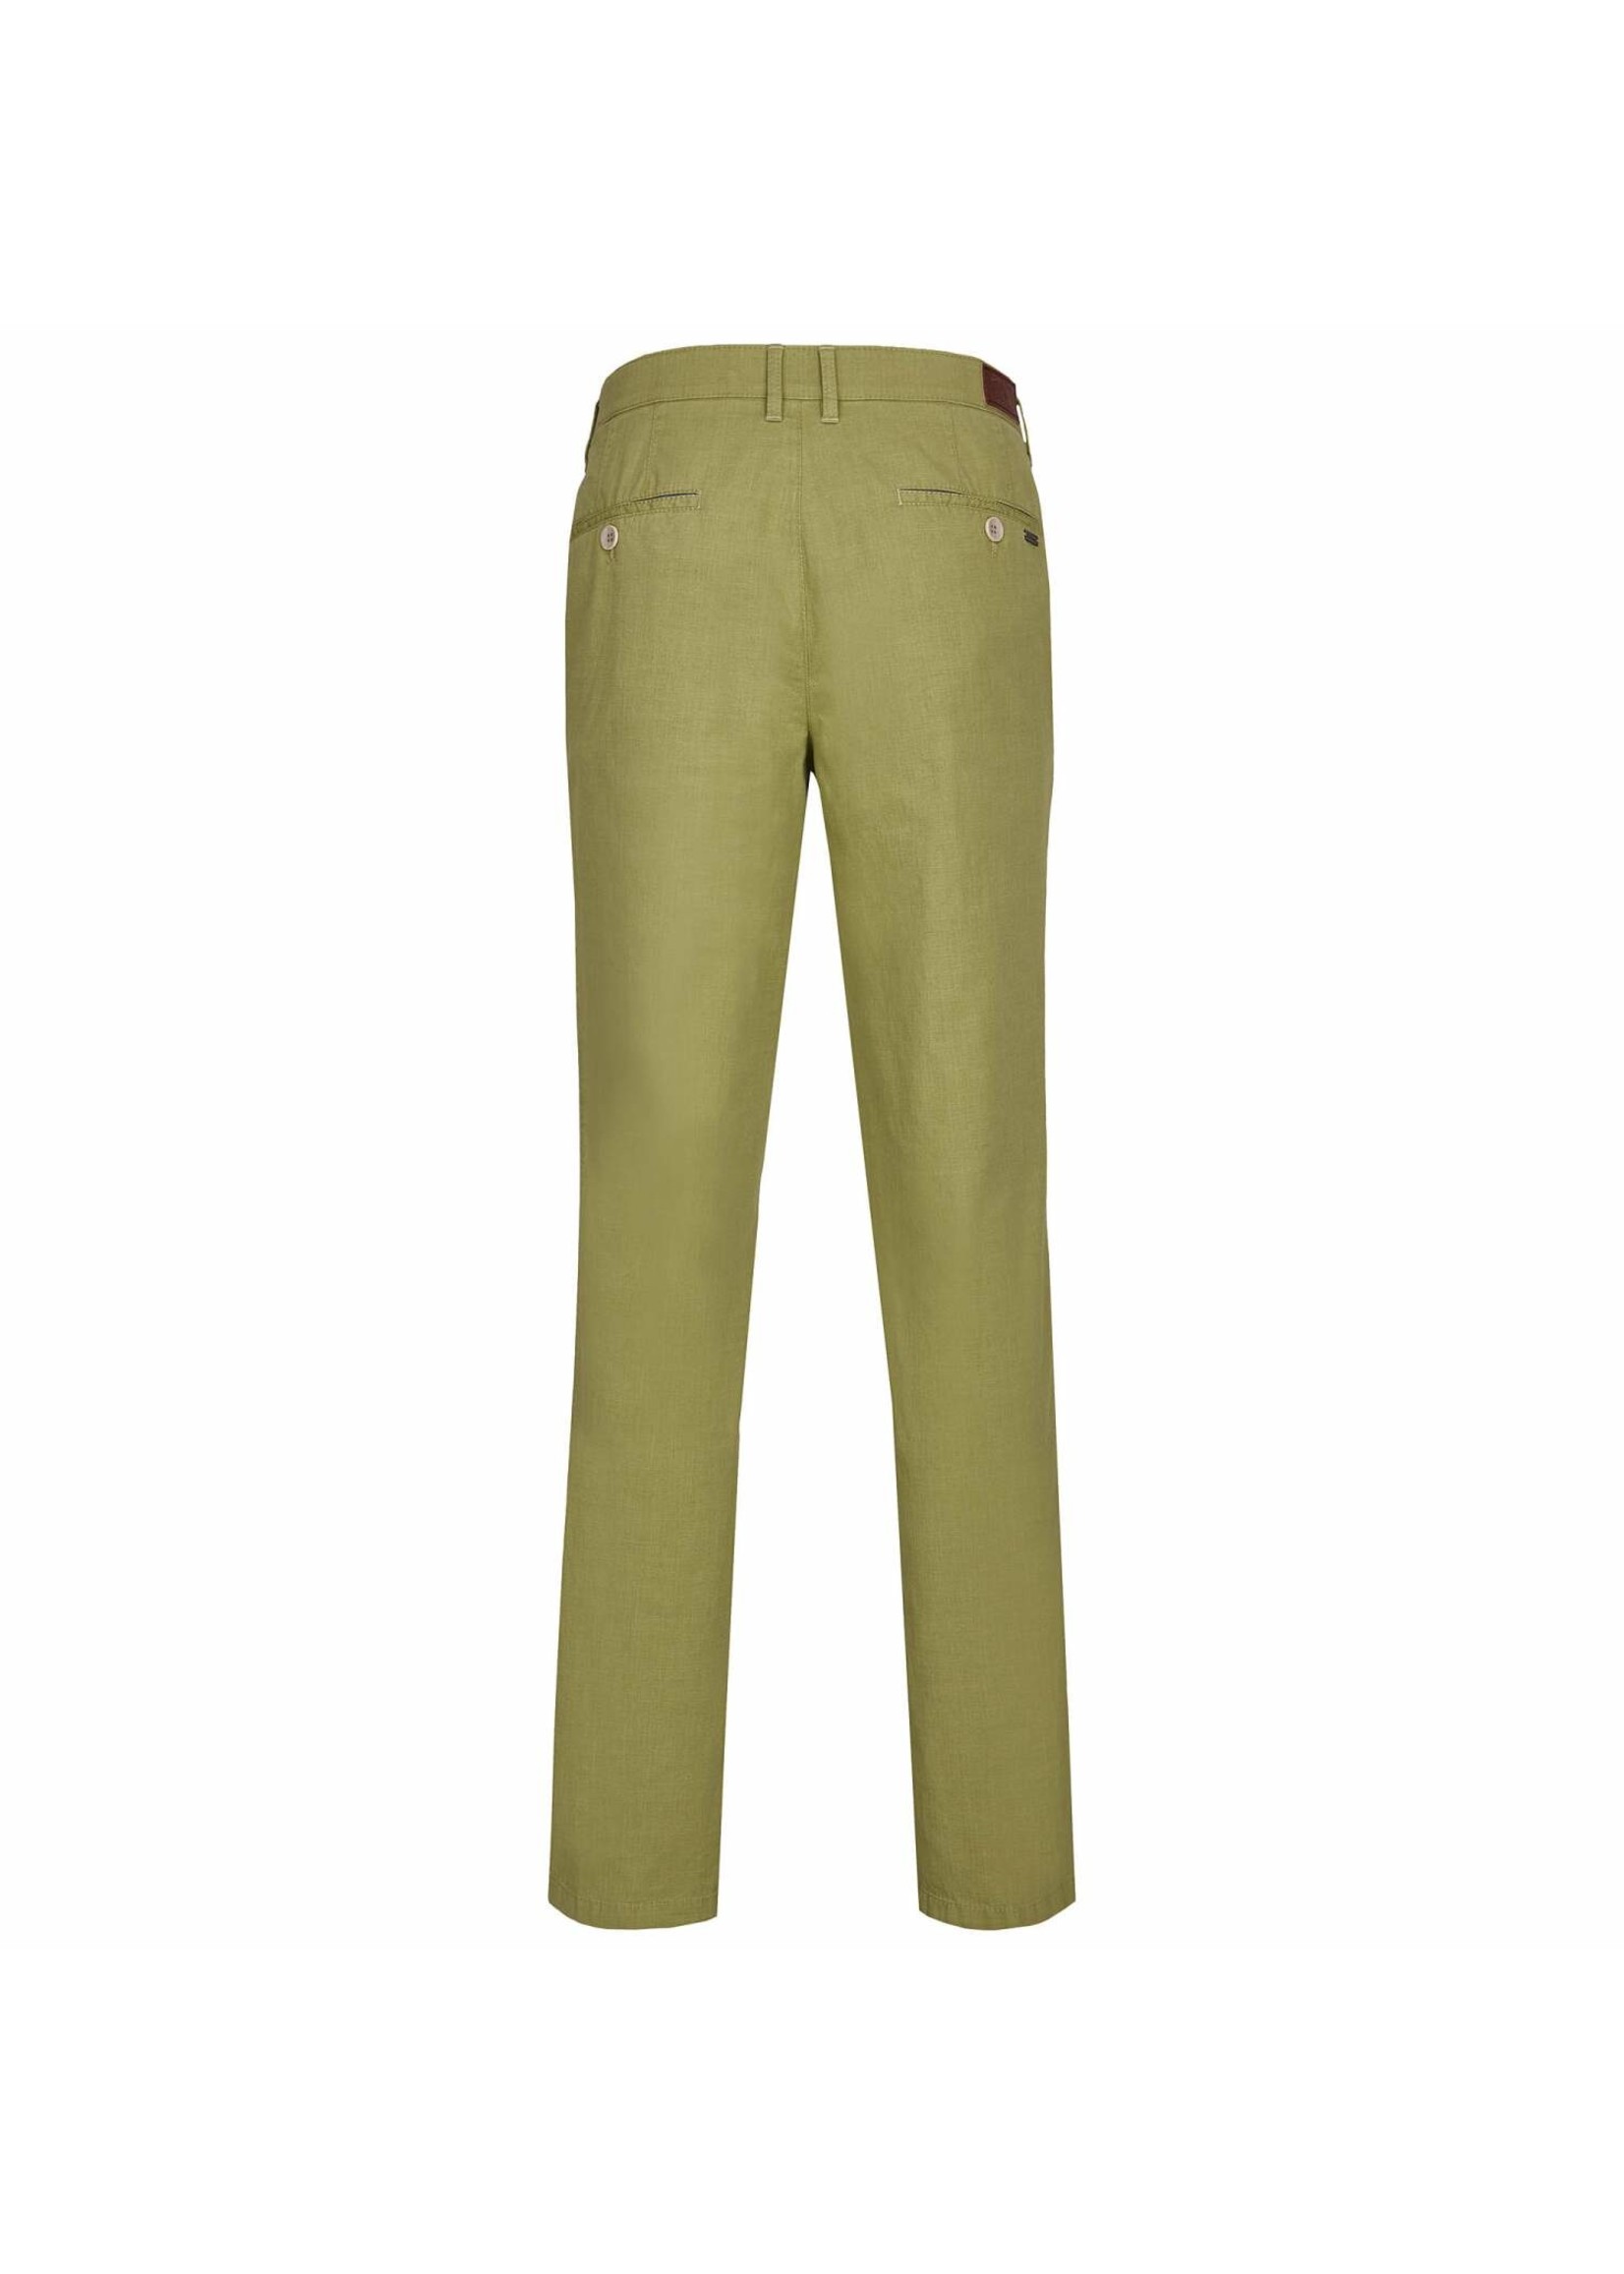 M.E.N.S. Pantalon en coton extensible effet lin style Madison-4917